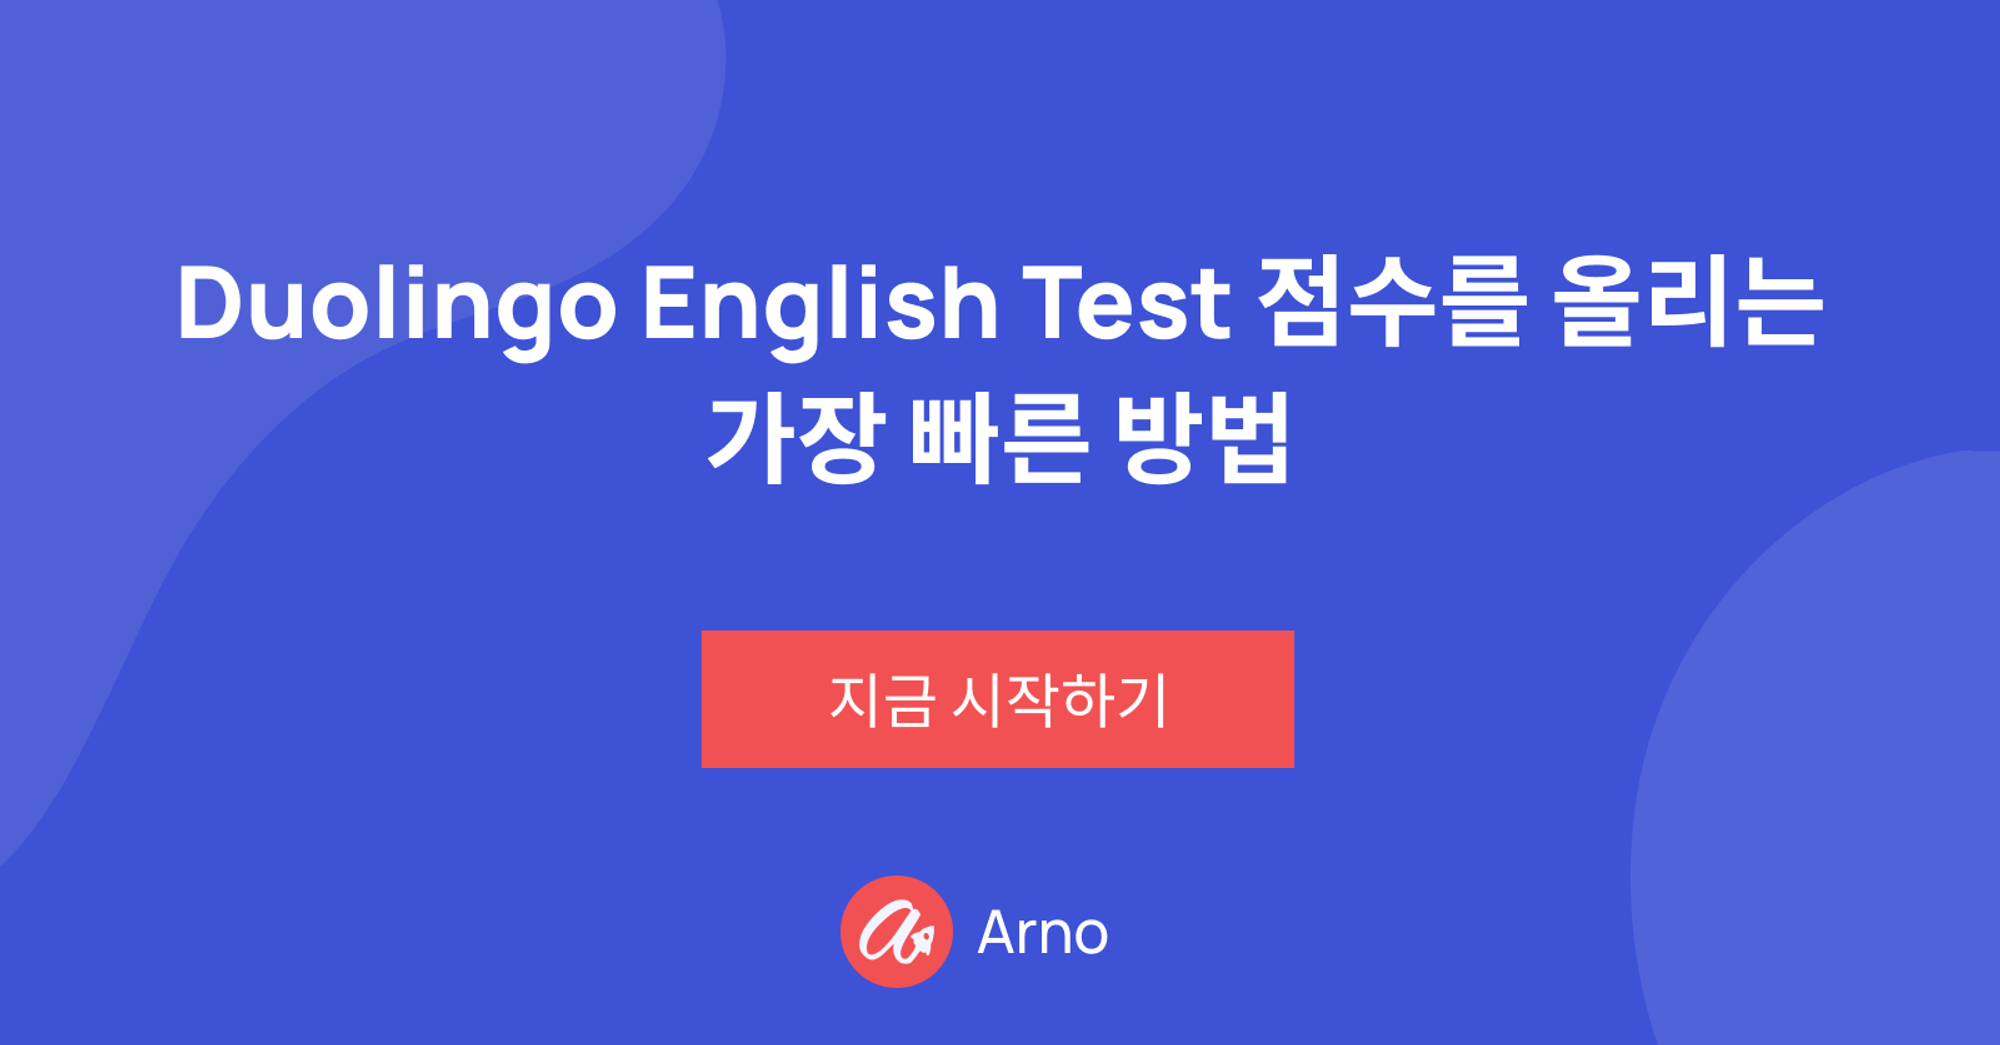 The fastest way to raise your Duolingo English Test Score